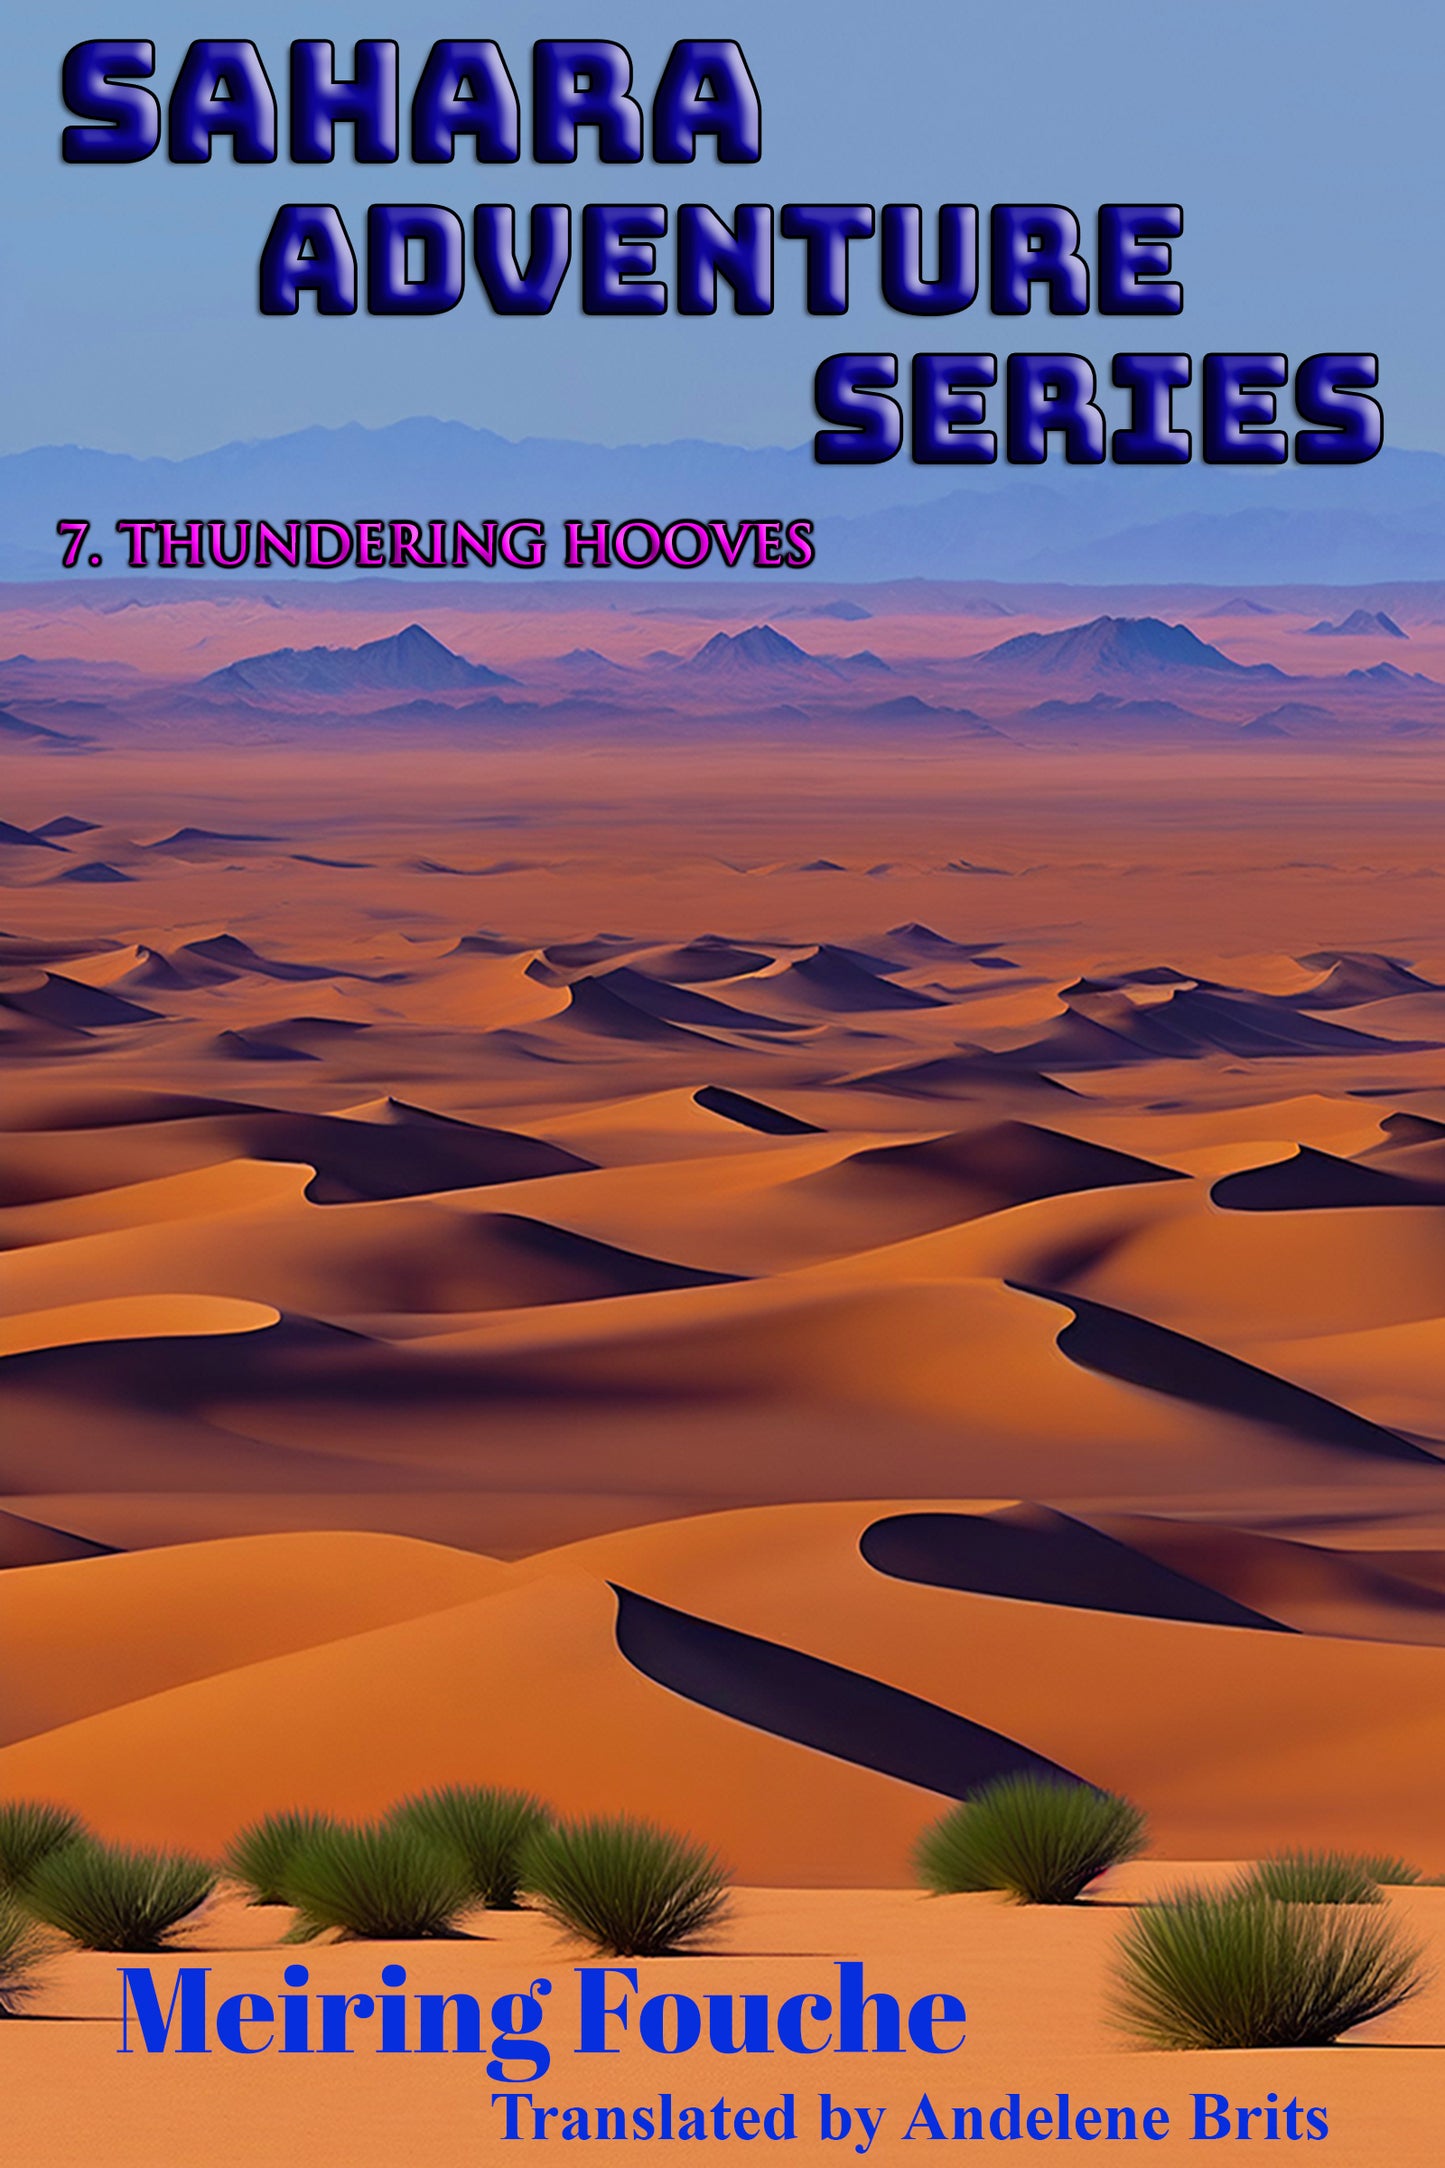 7. Sahara Adventure Series - Thundering Hooves